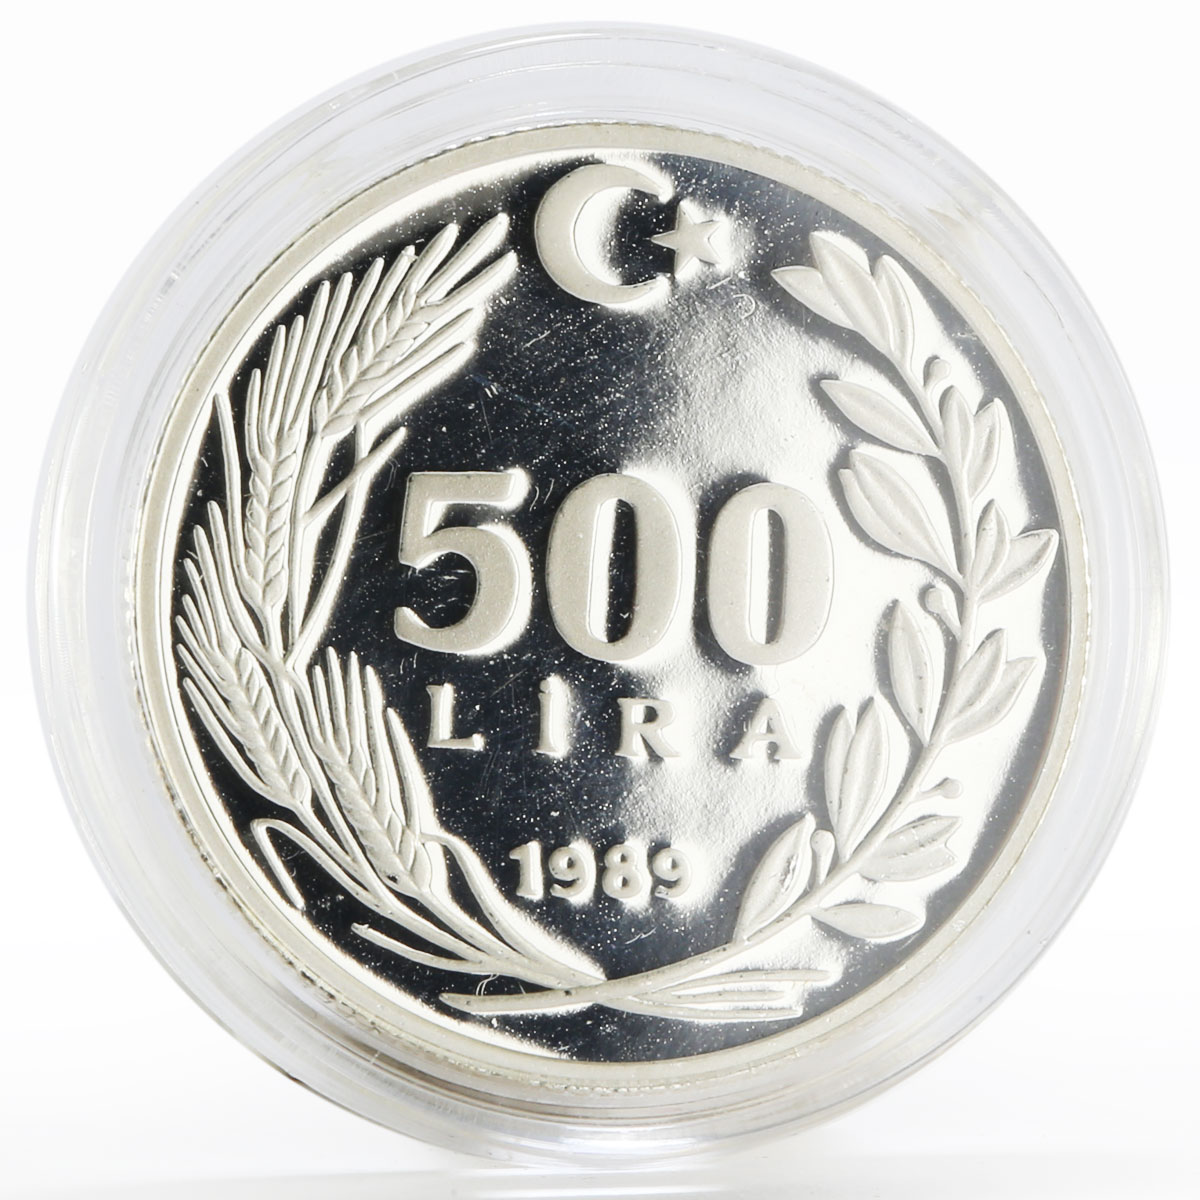 Turkey 500 lira 10th Anniversary of Circulation Special Edition silver coin 1989